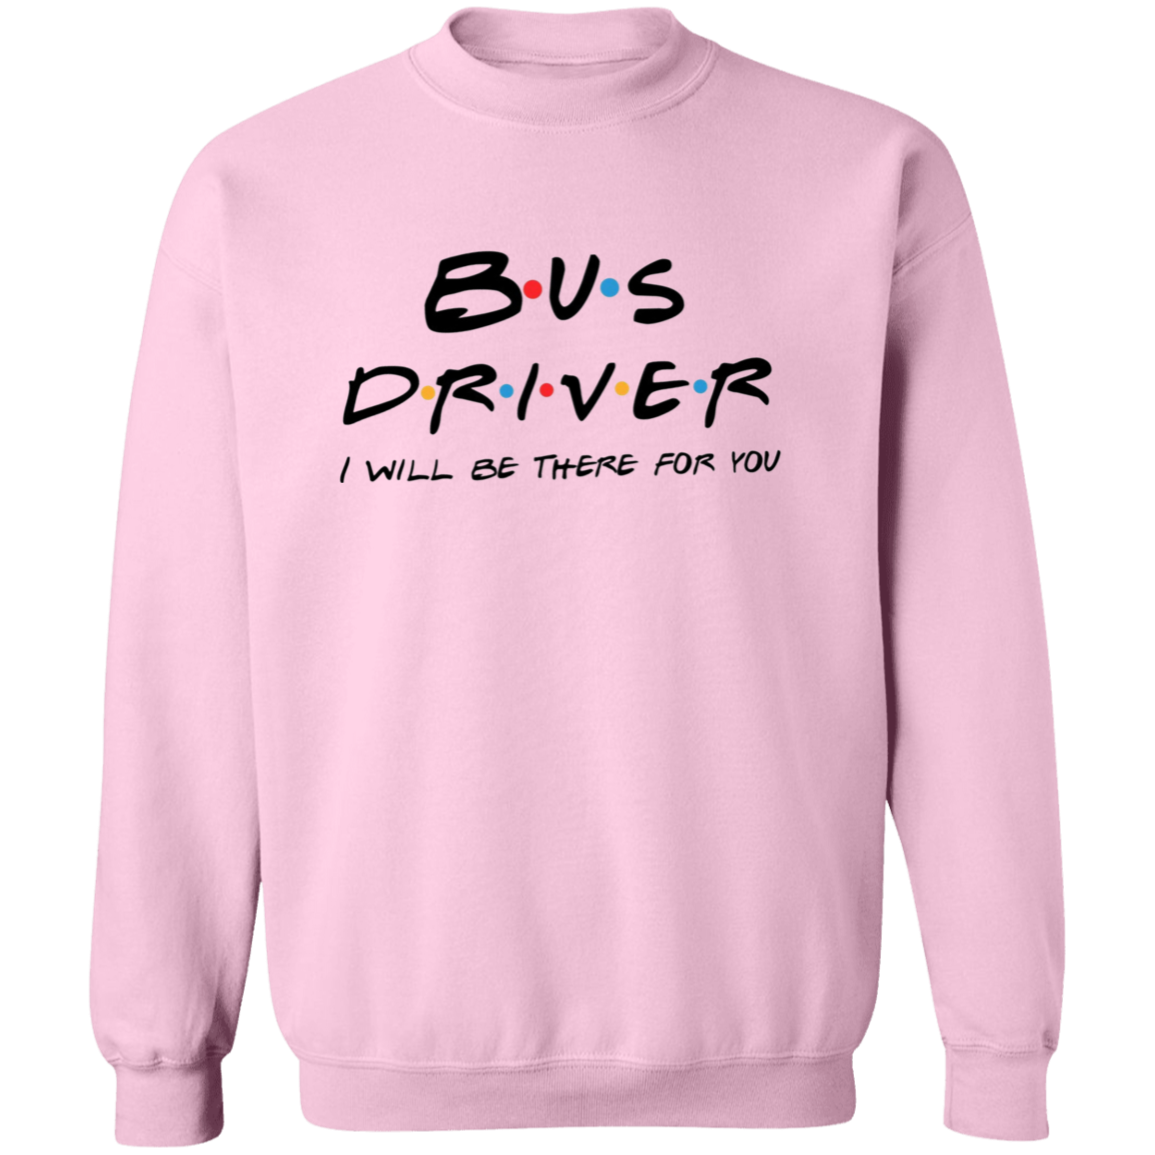 Unisex Bus Driver Sweatshirt